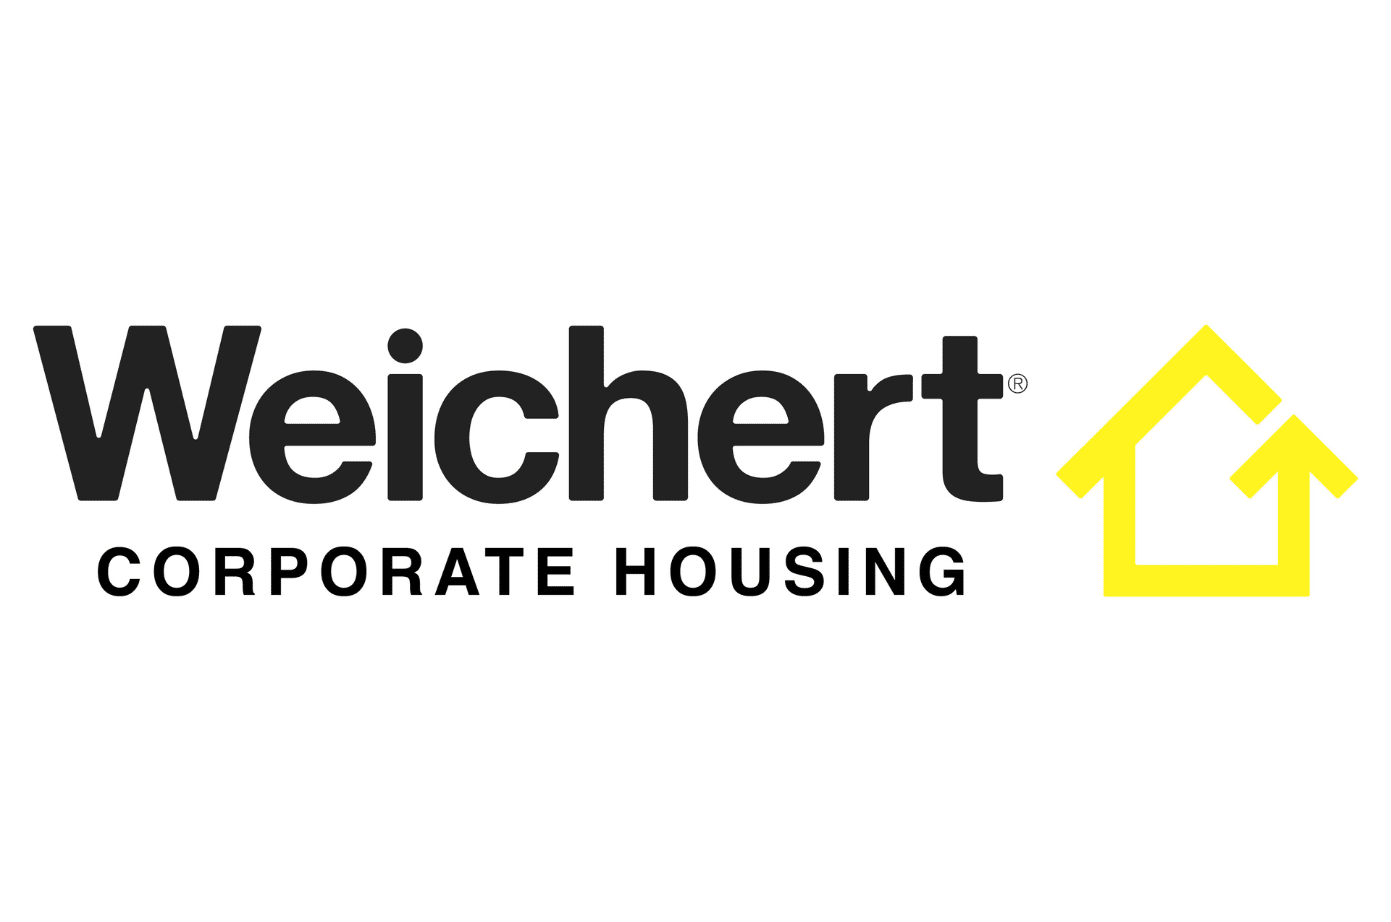 Weichert Corporate Housing Earns Industry’s Highest Service Scores in Nationwide Survey